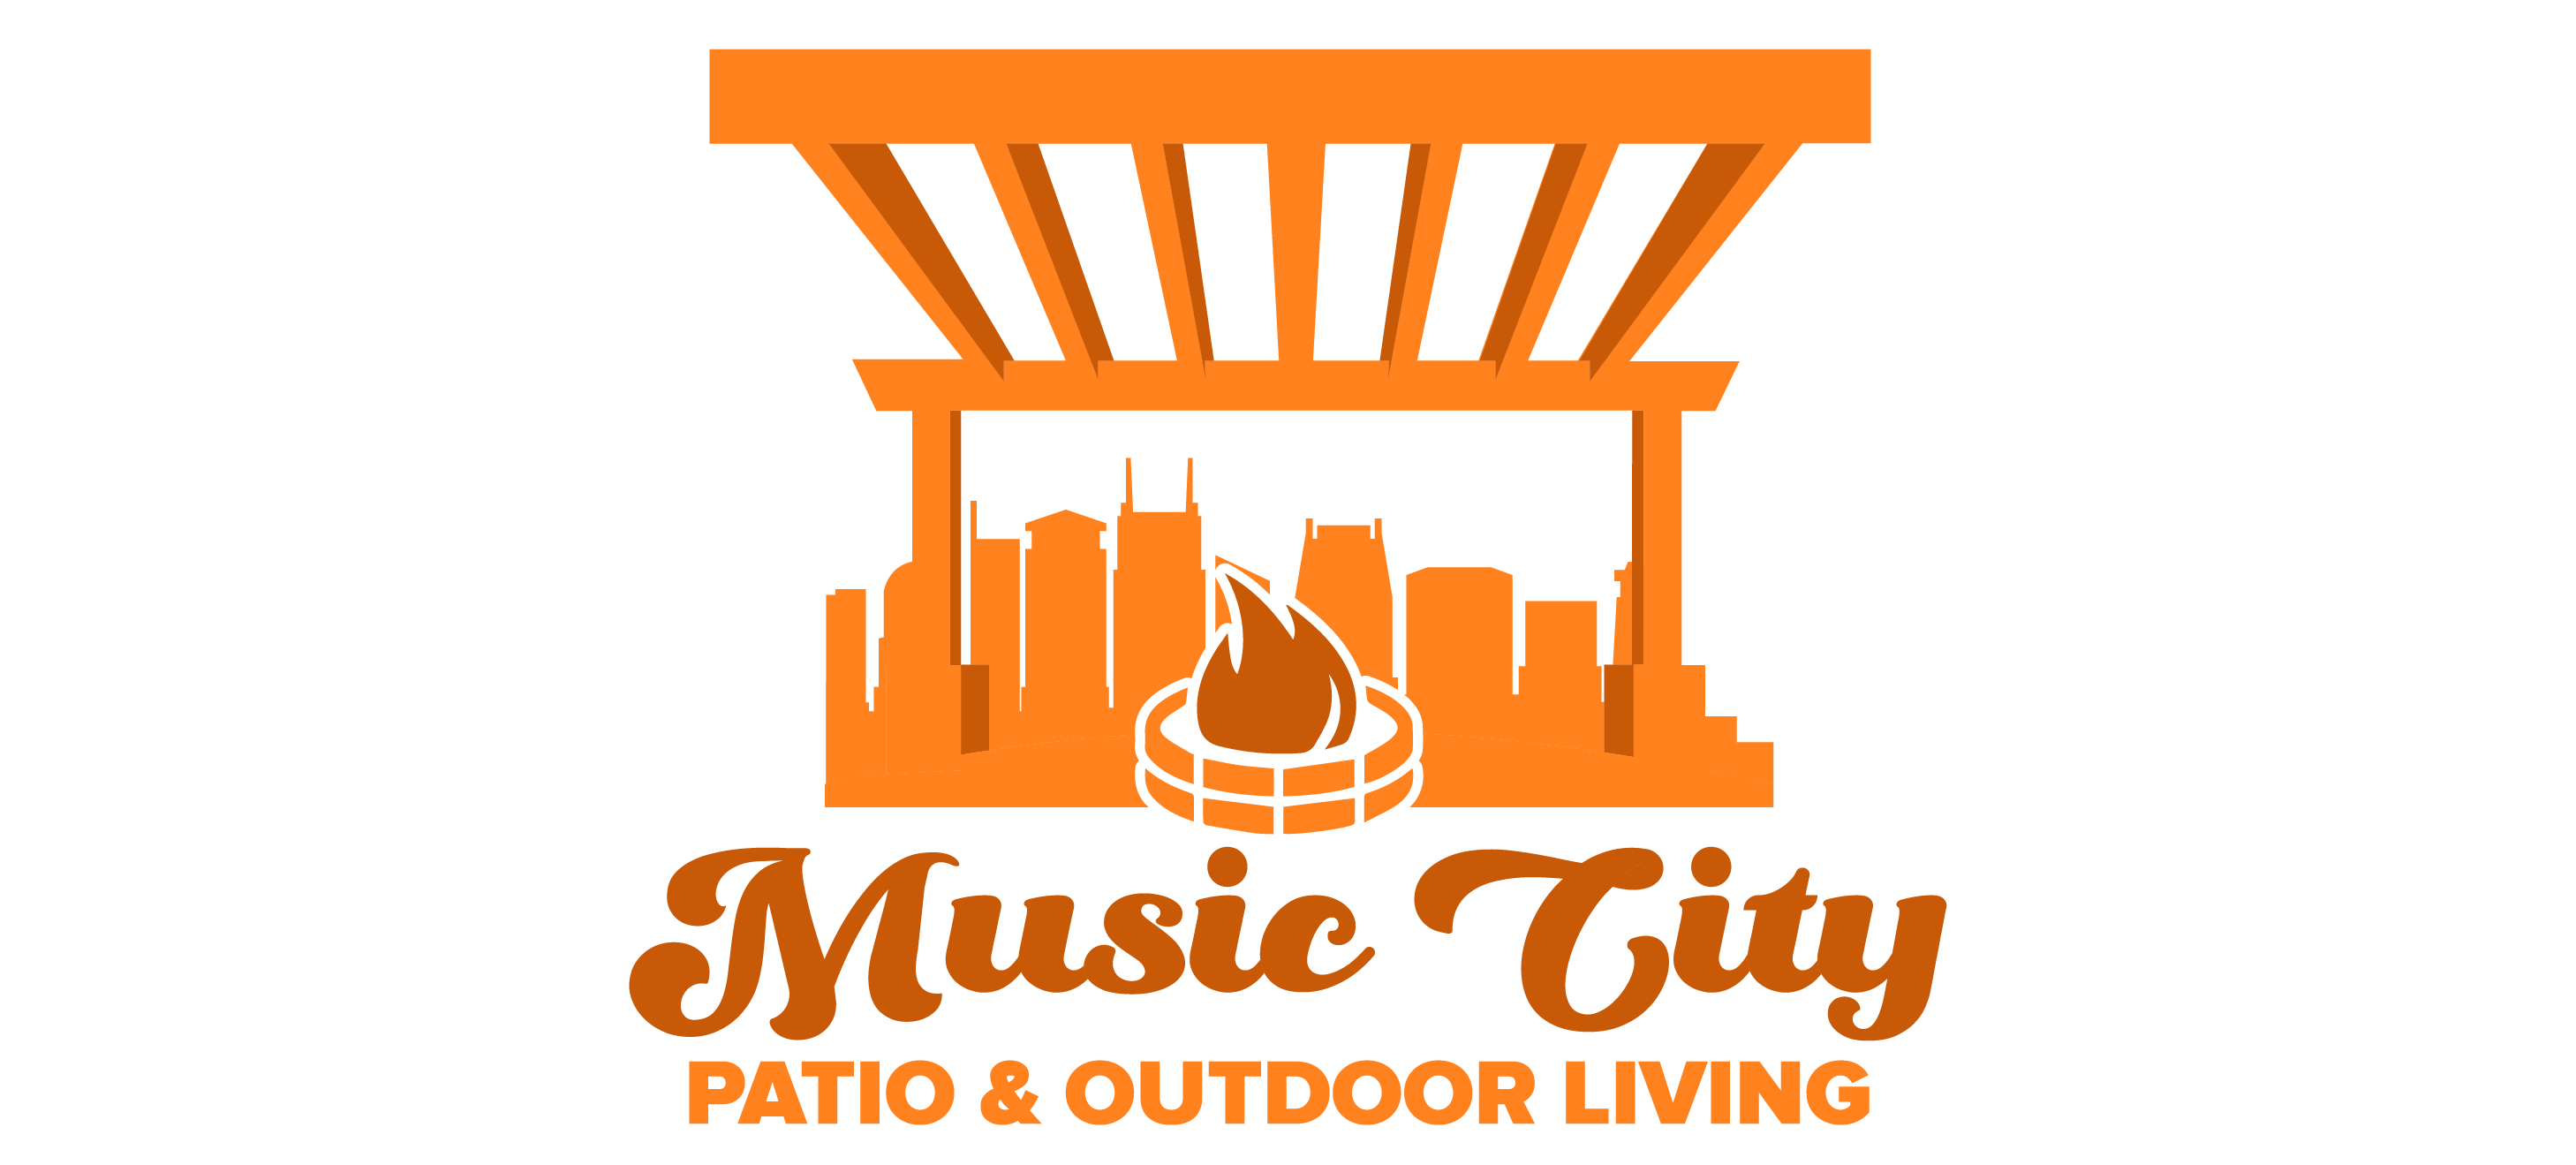 Music City Patio & Outdoor Living Nashville TN